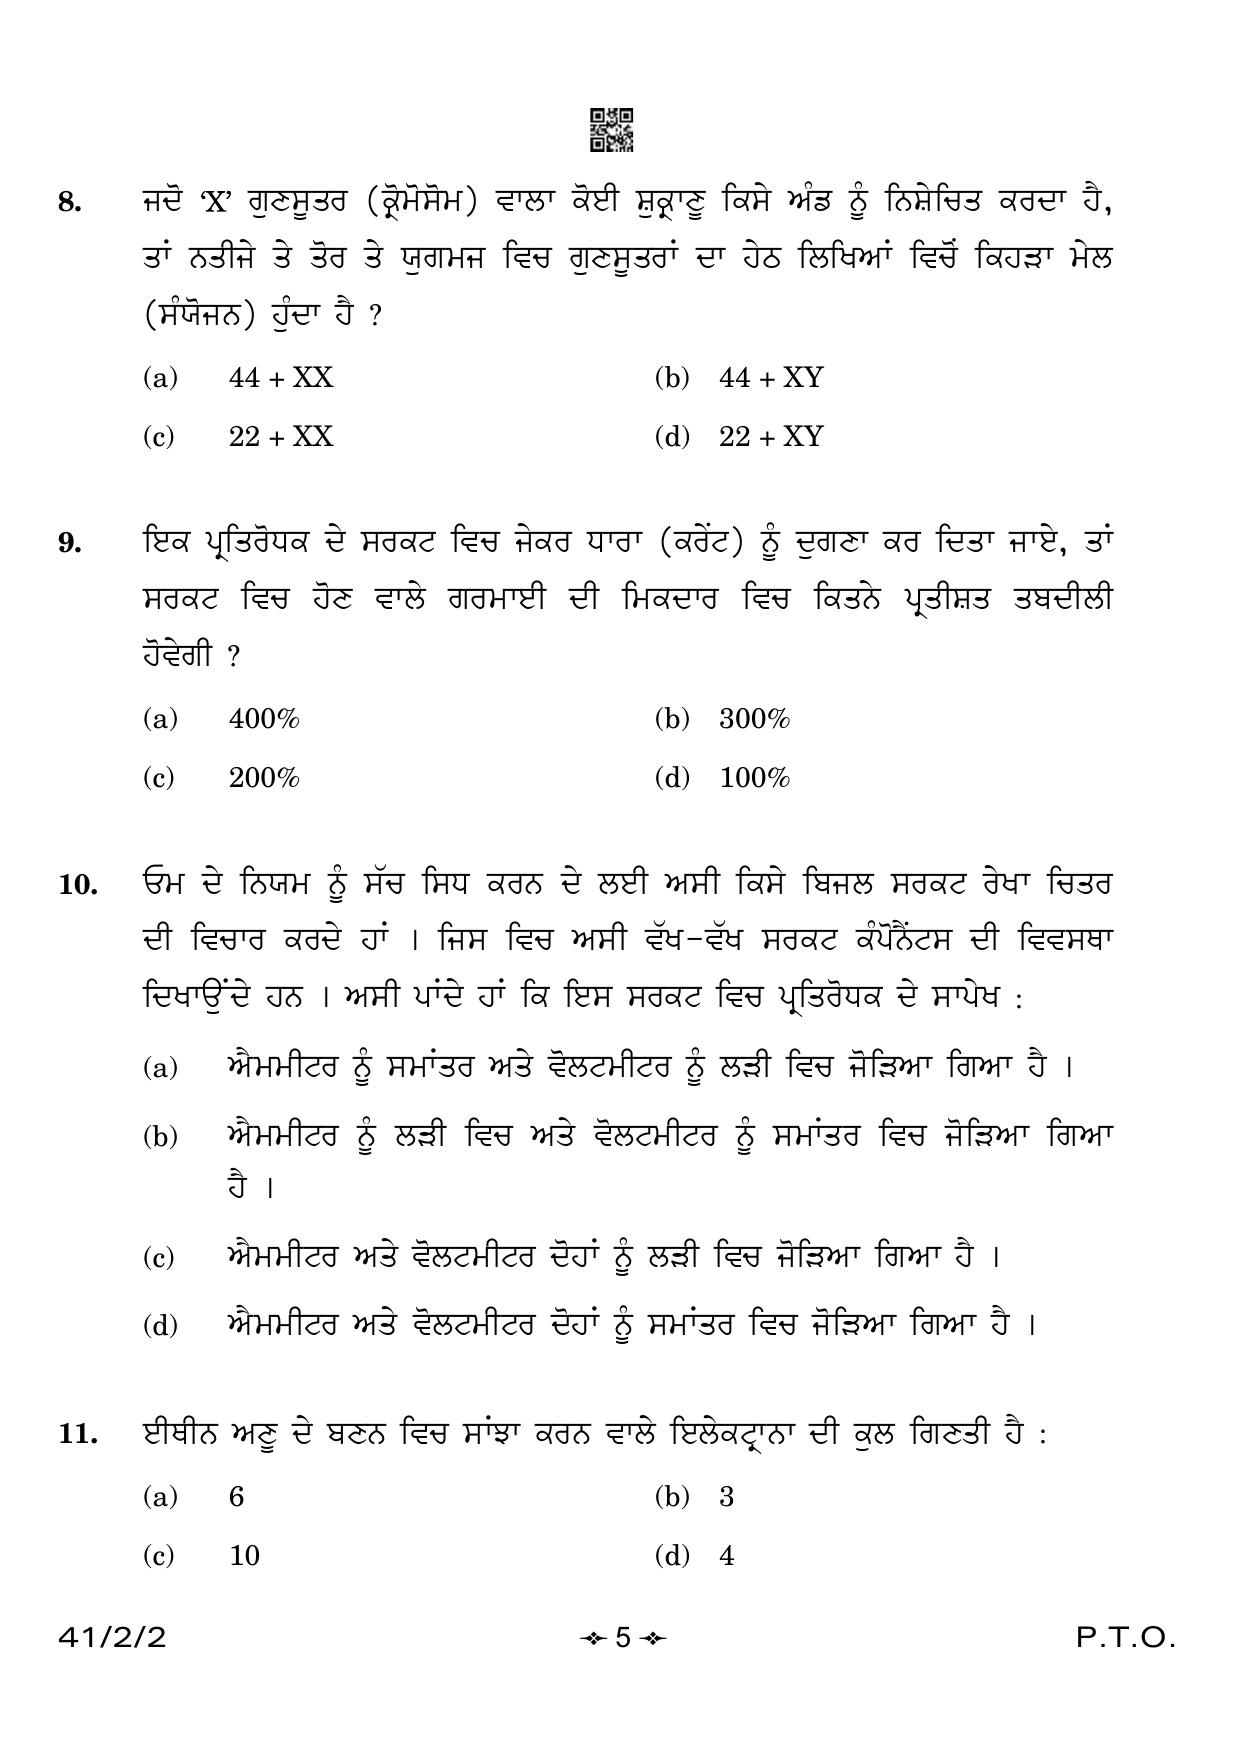 CBSE Class 10 41-2-2 Science Punjabi Version 2023 Question Paper - Page 5